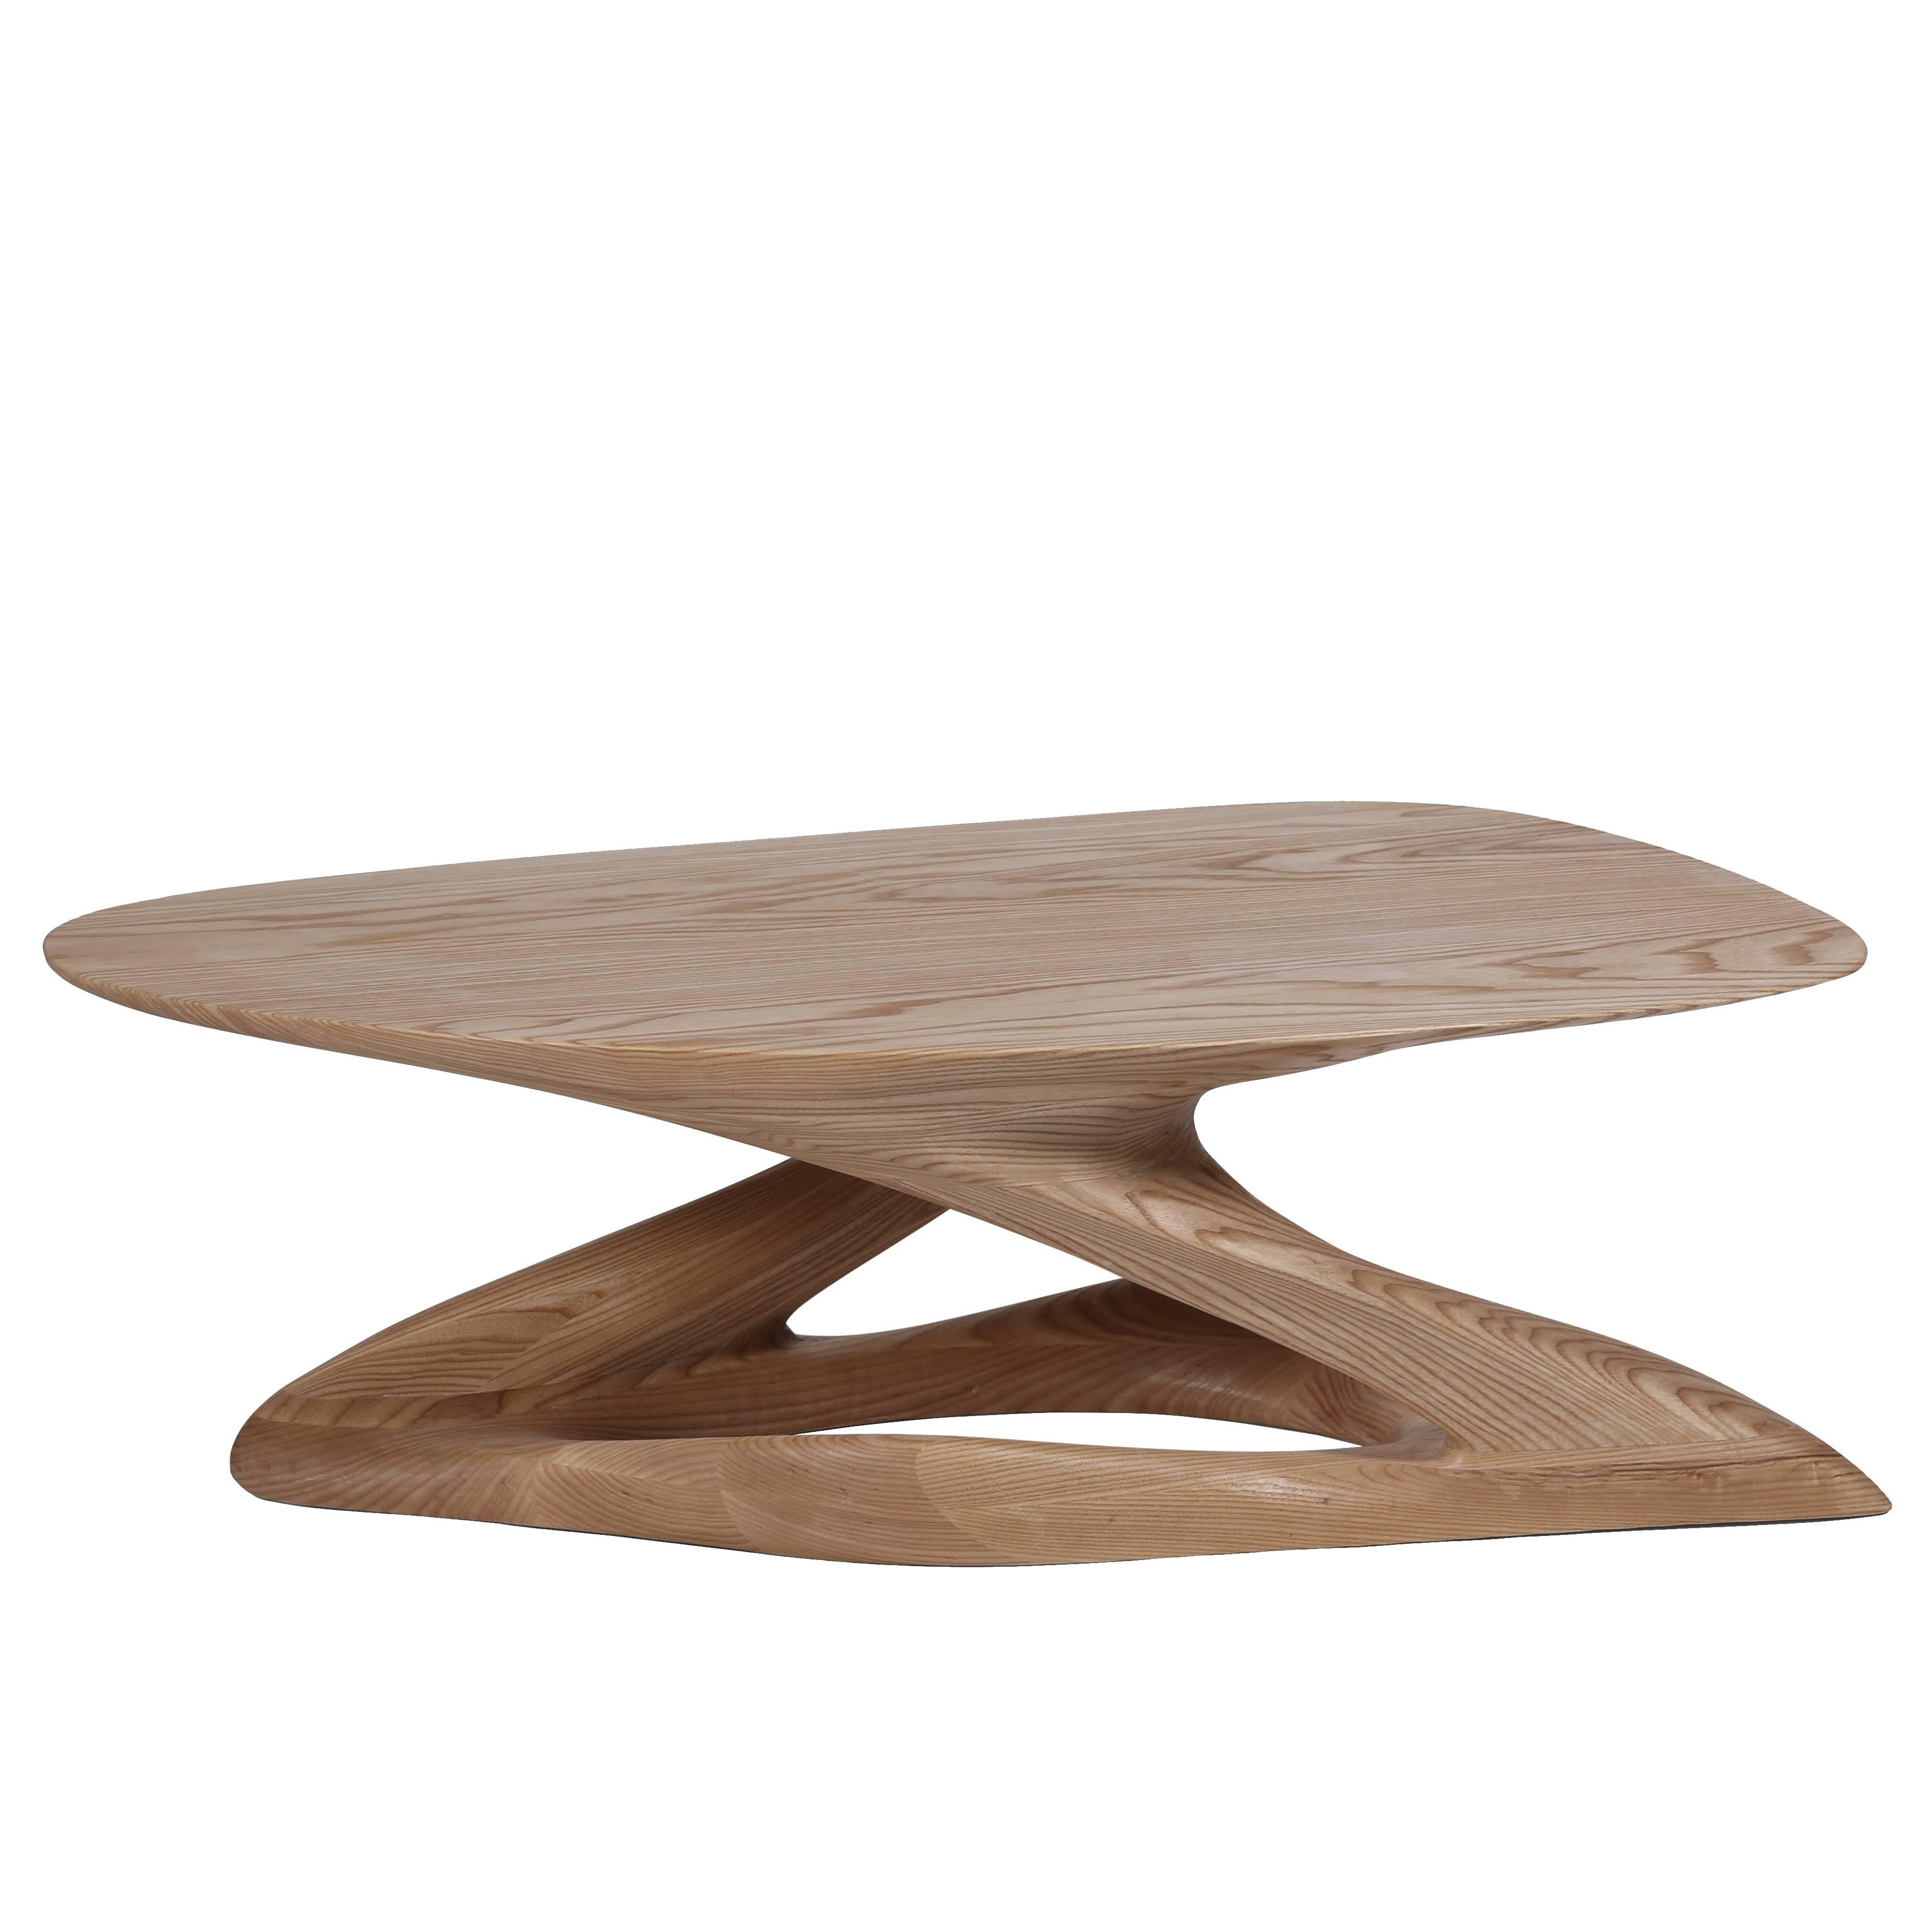 Amorph Plie modern coffee table in Honey stain in Ash wood